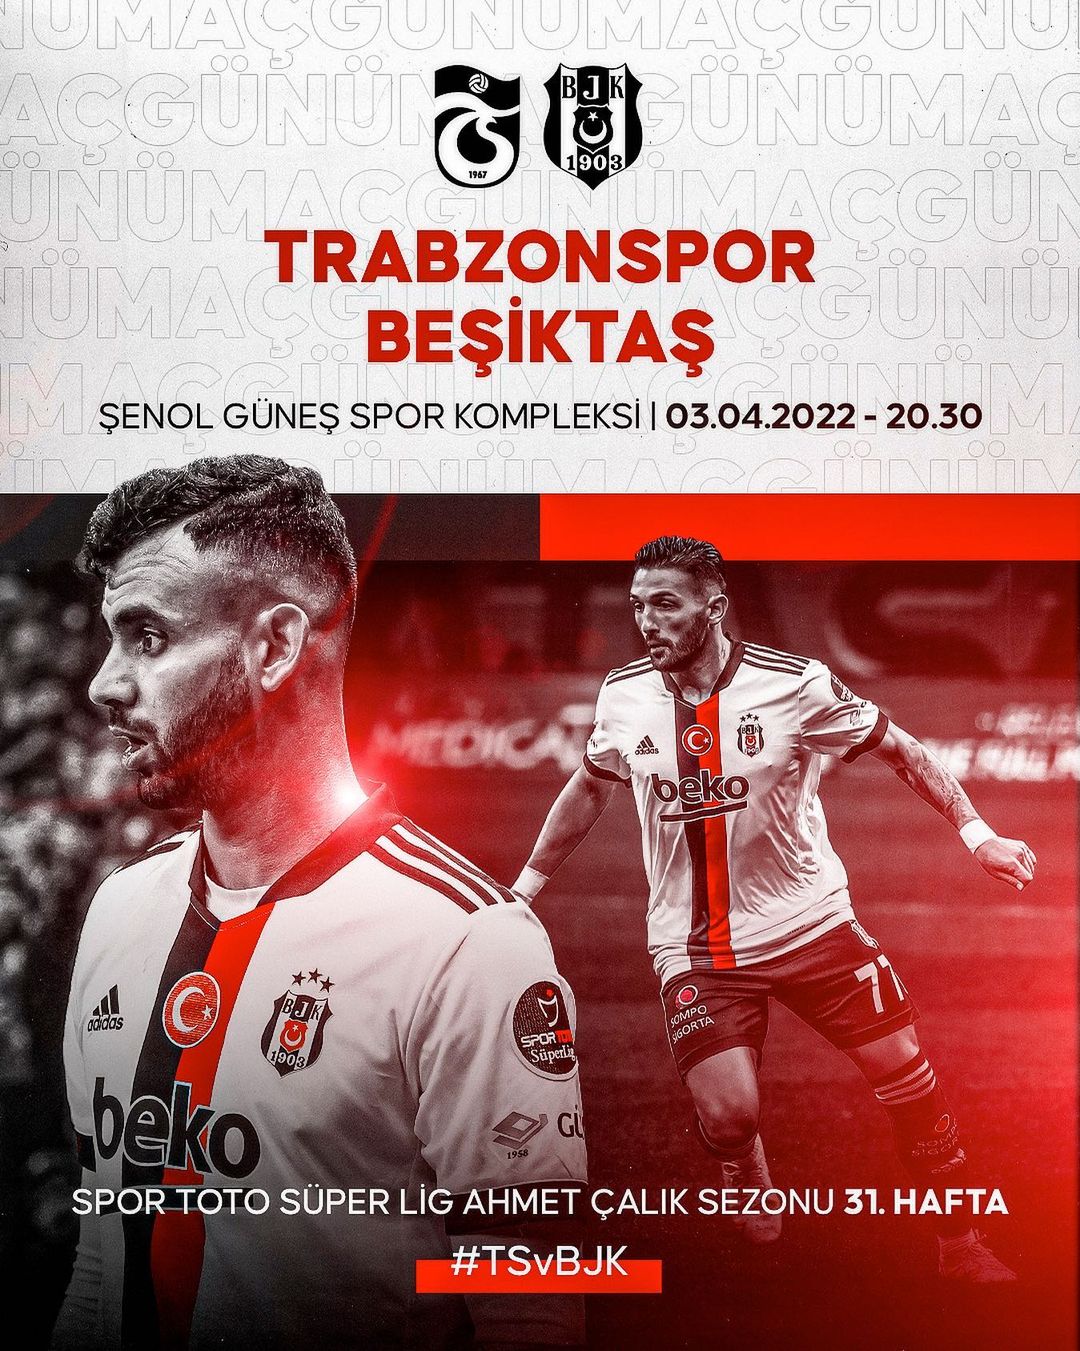 Trabzonspor Beşiktaş canlı izle TS BJK şifresiz Bein Sports canlı maç izle